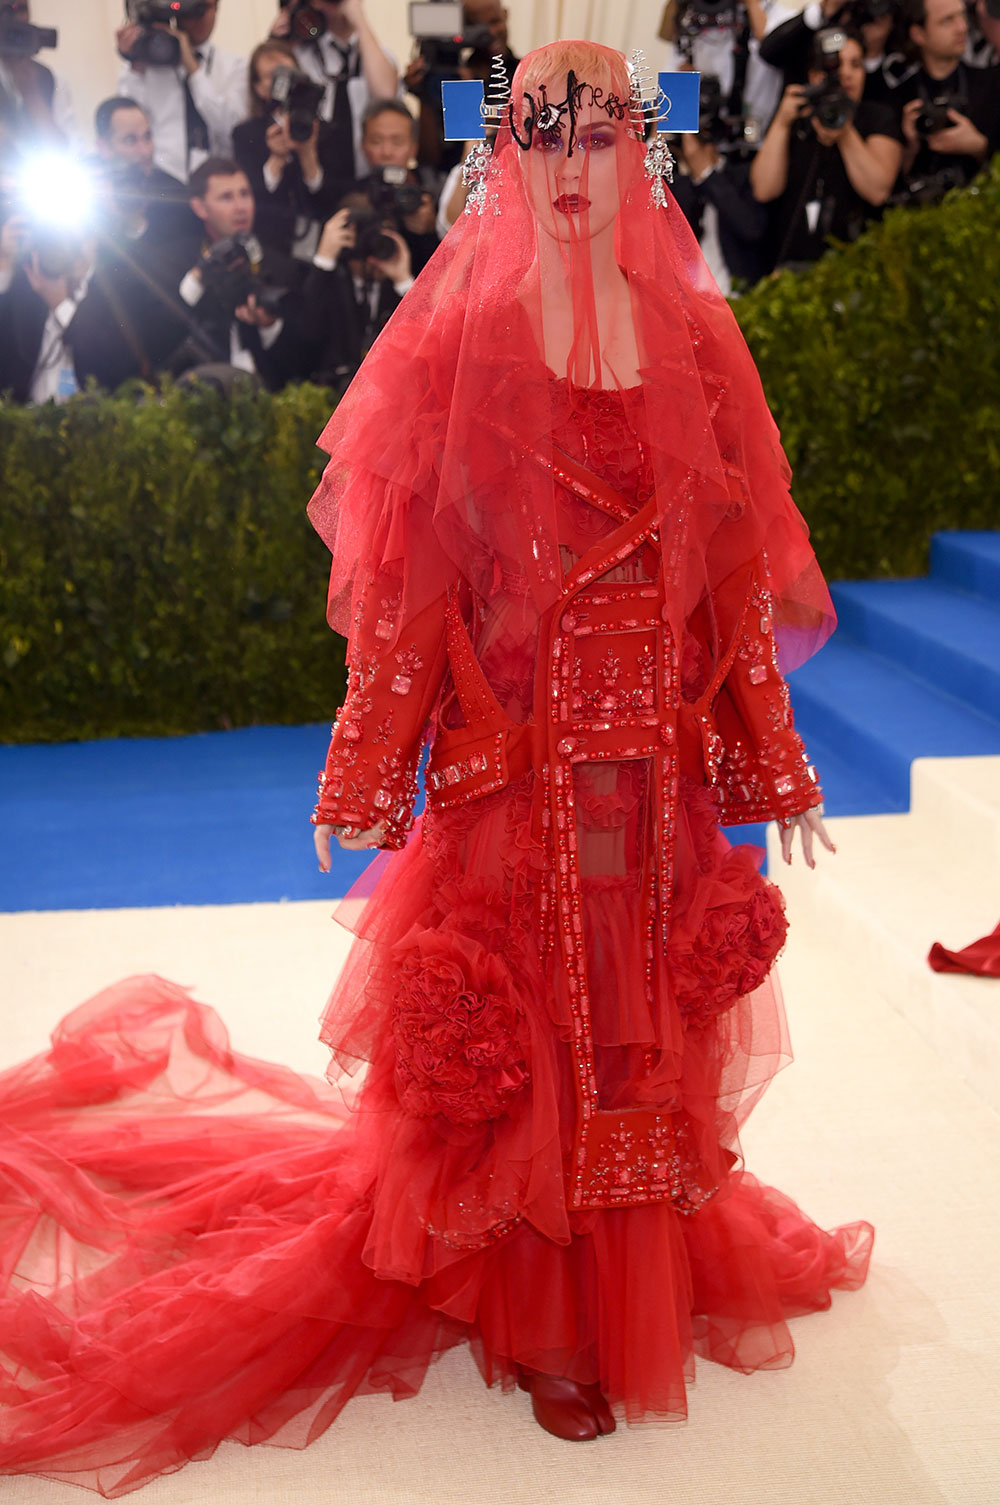 Katy Perry, who is co-hosting the event, wears custom Maison Margiela Artisanal by John Galliano.